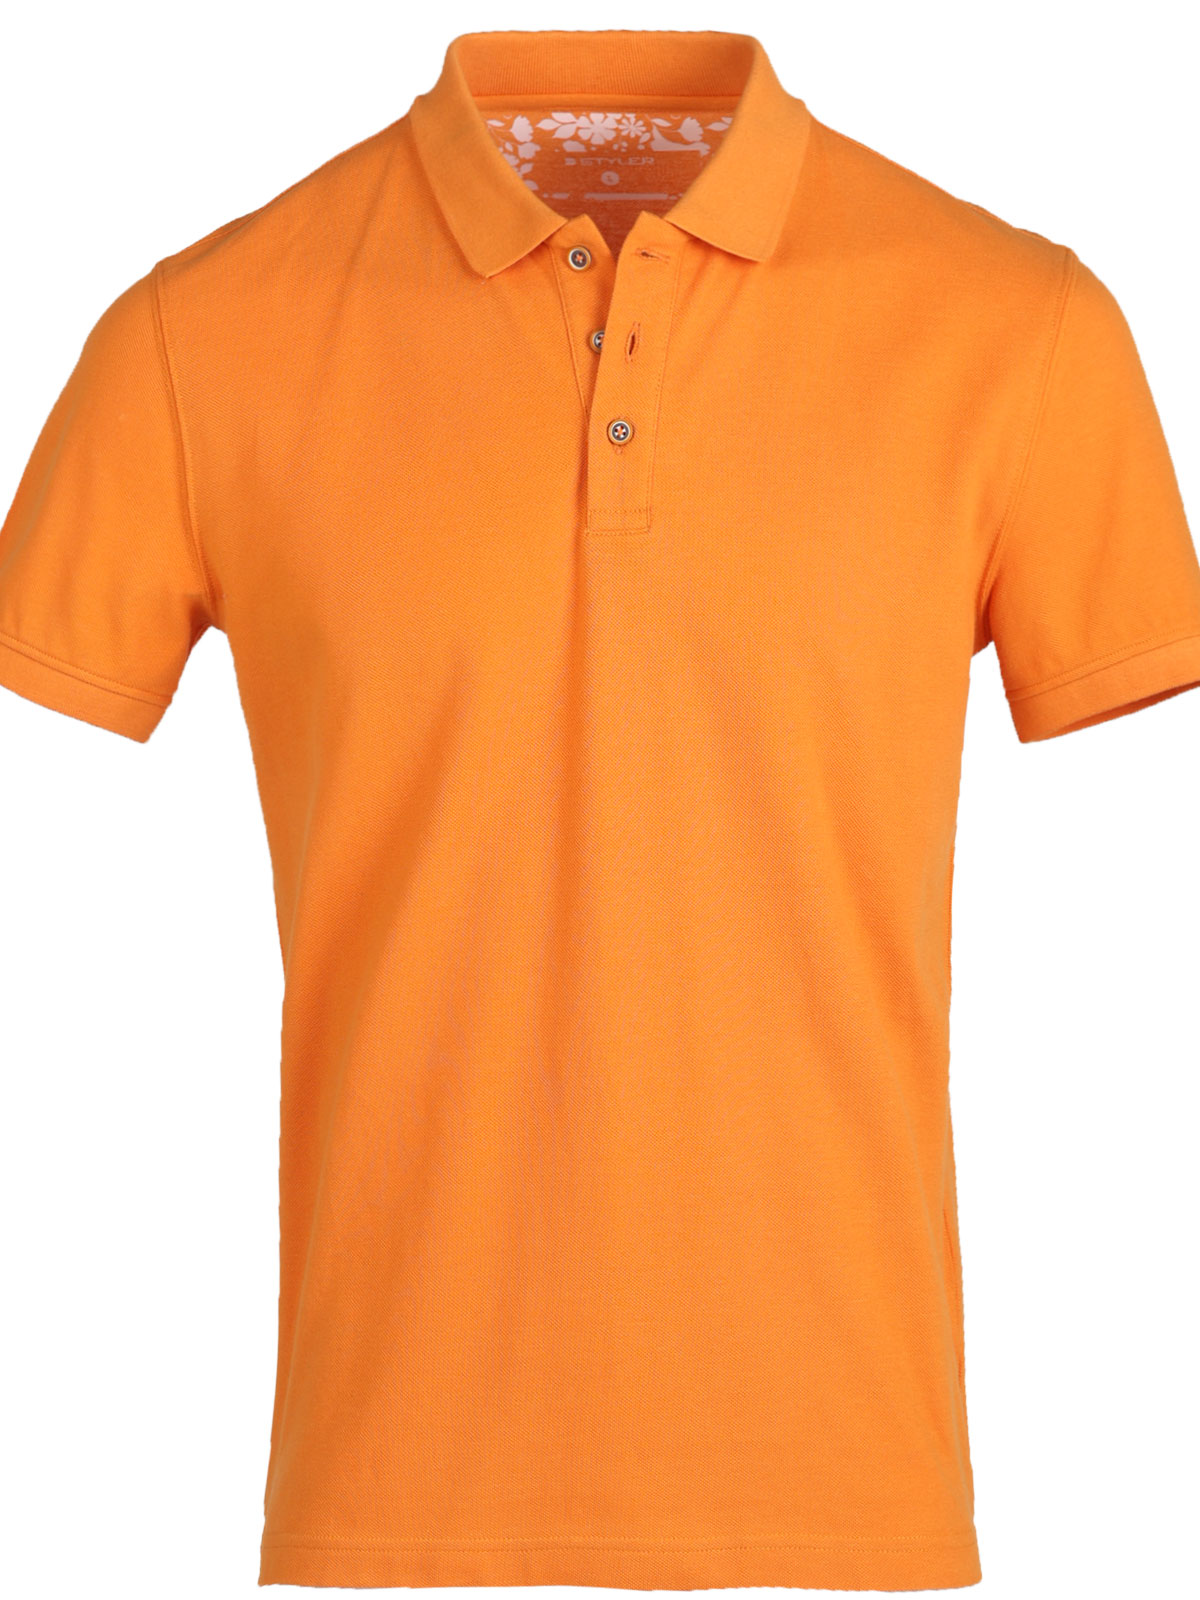 Tshirt σε πορτοκαλί χρώμα με πλεκτό για - 93434 € 37.12 img3